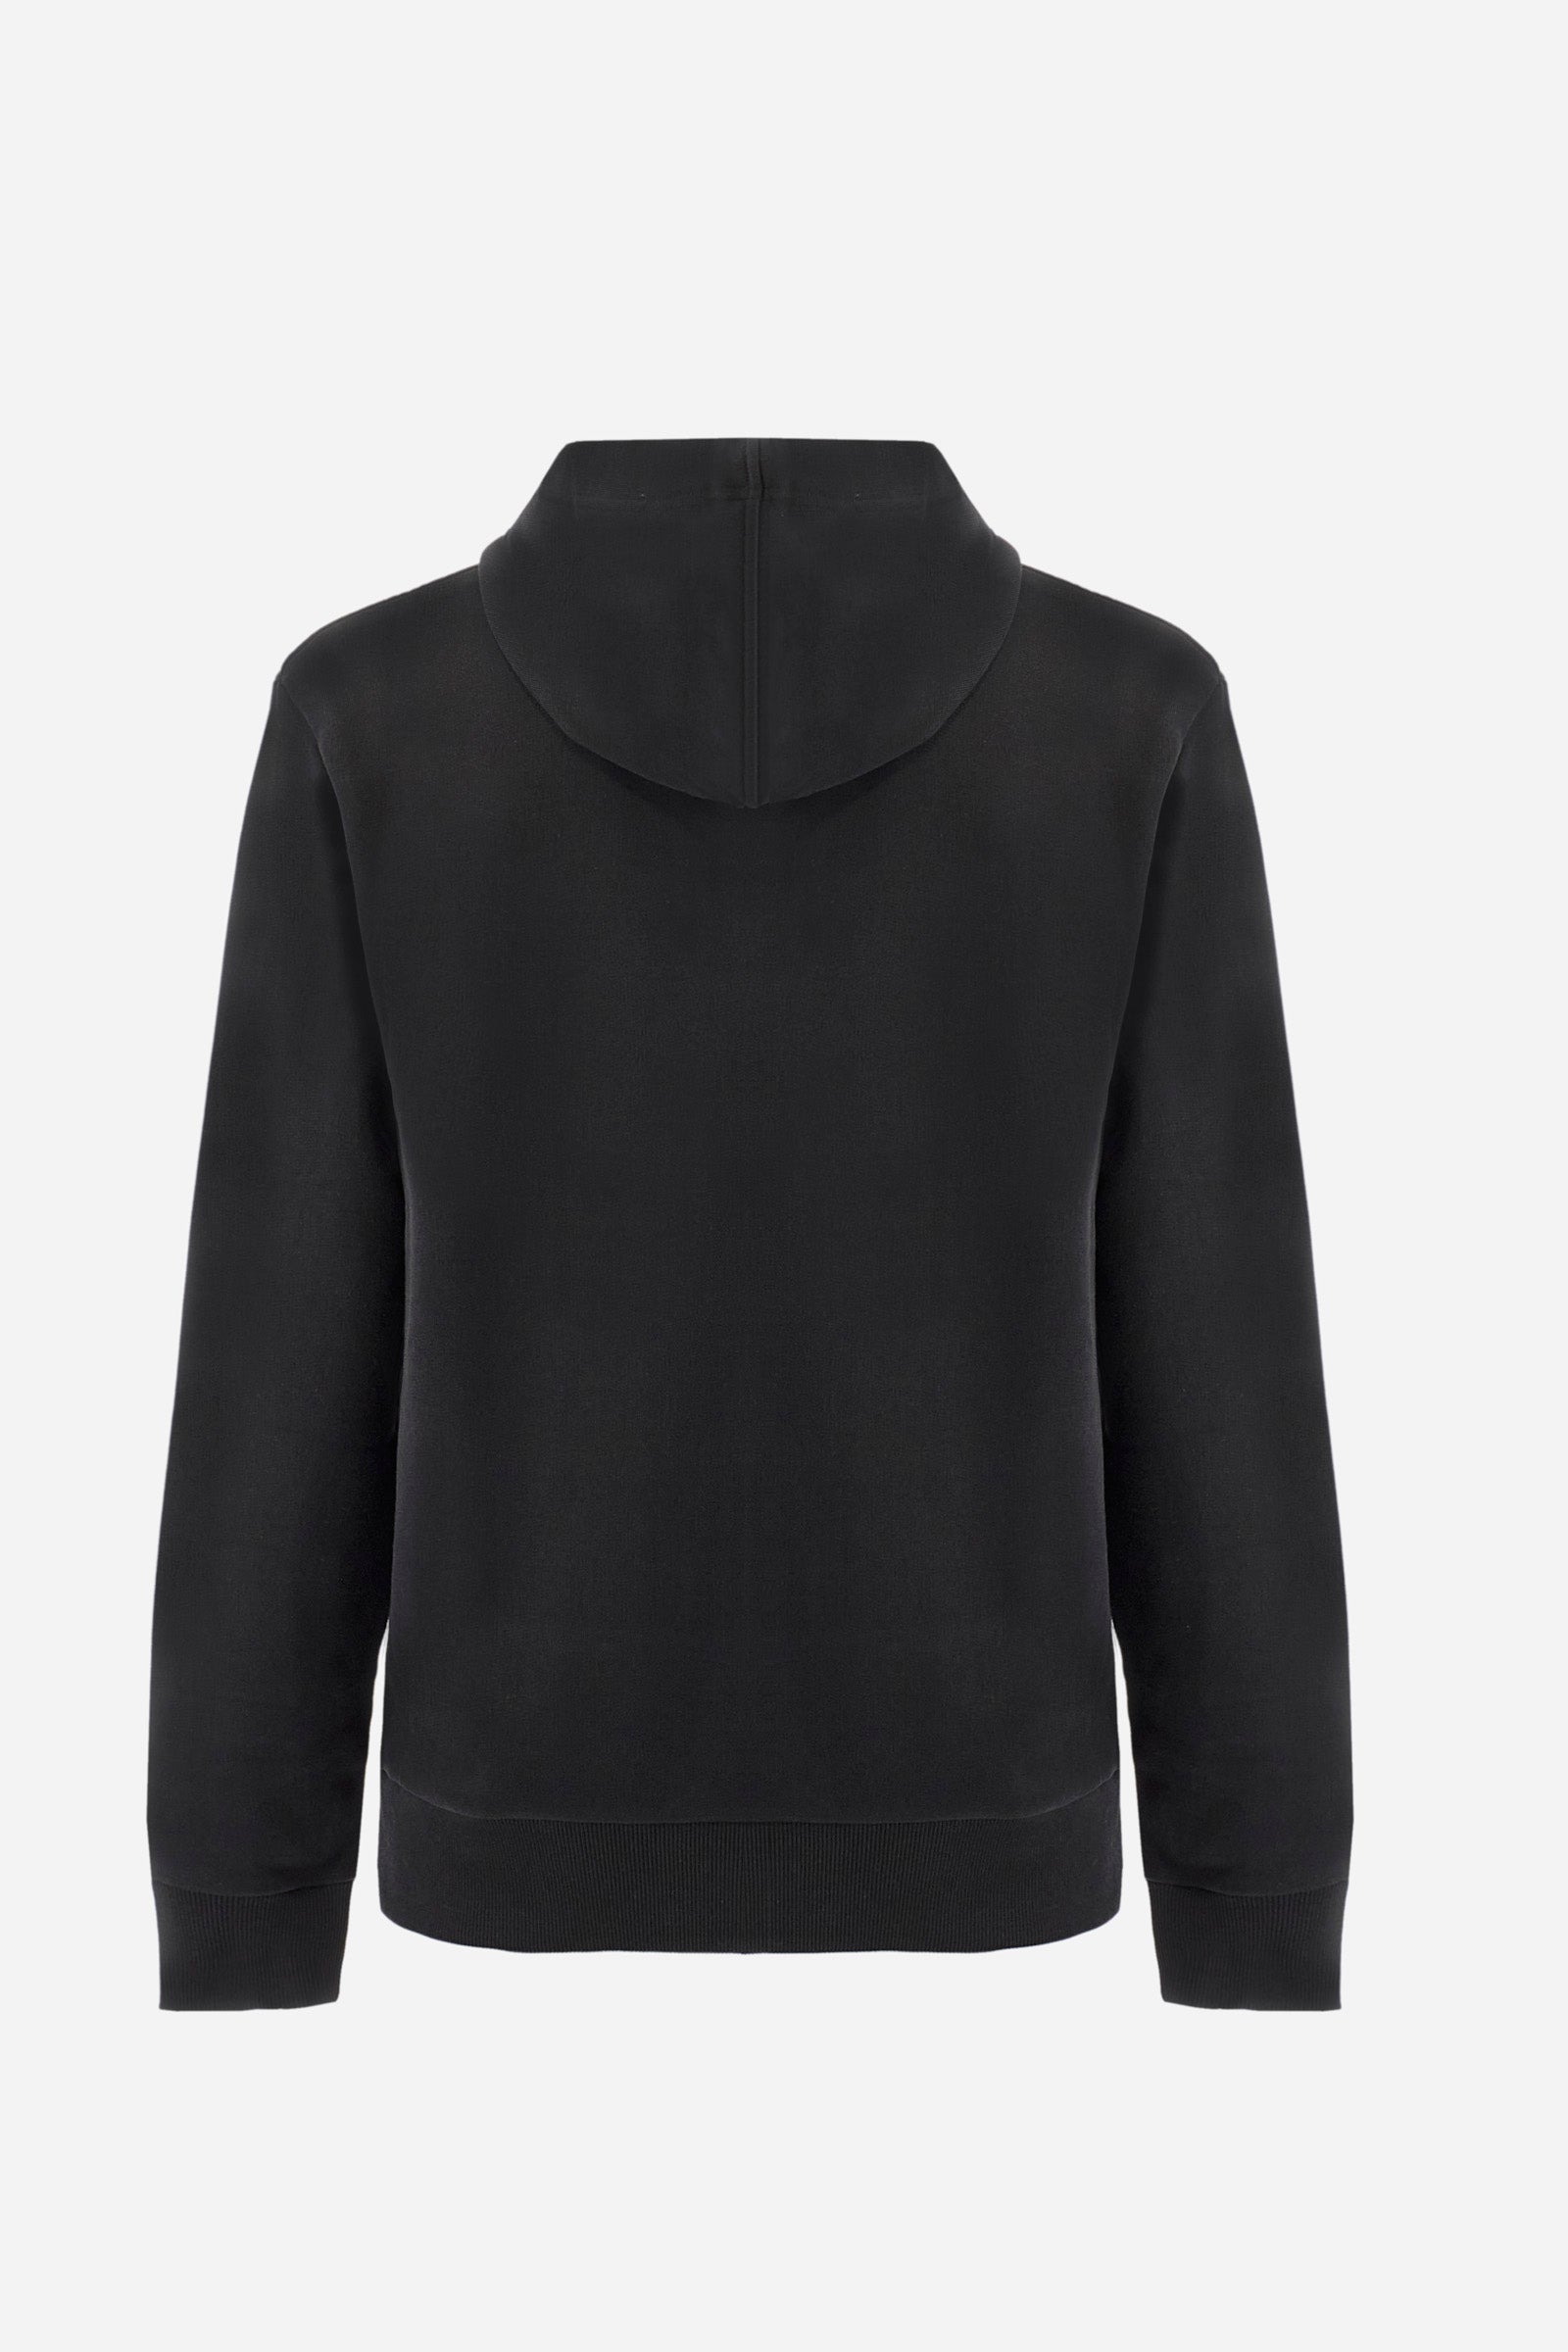 Men's full-zip sweatshirt in a regular fit - Thiago